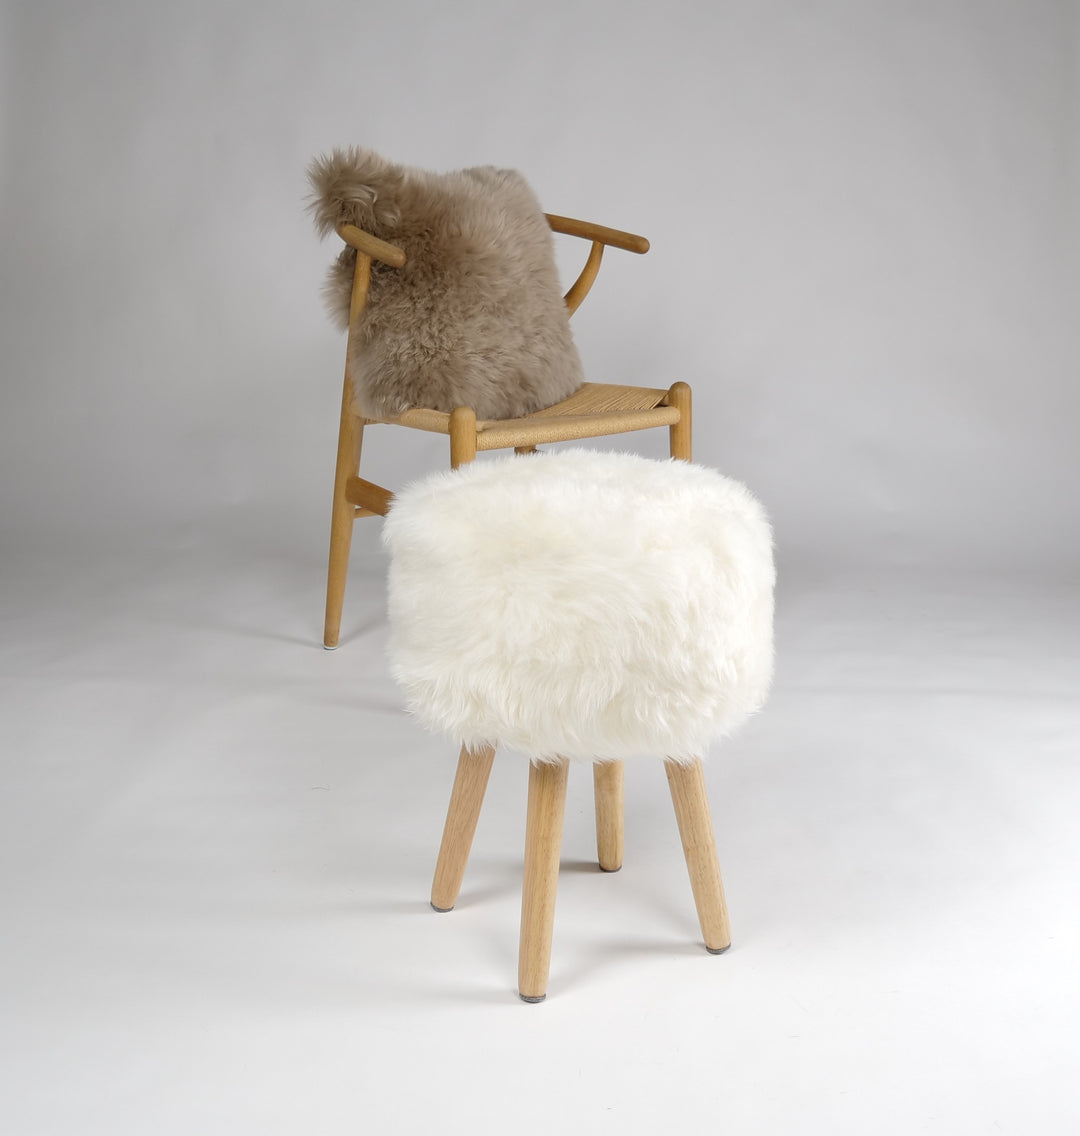 New Zeeland Sheepskin Chair - Sheep Skin - Accesorries - White